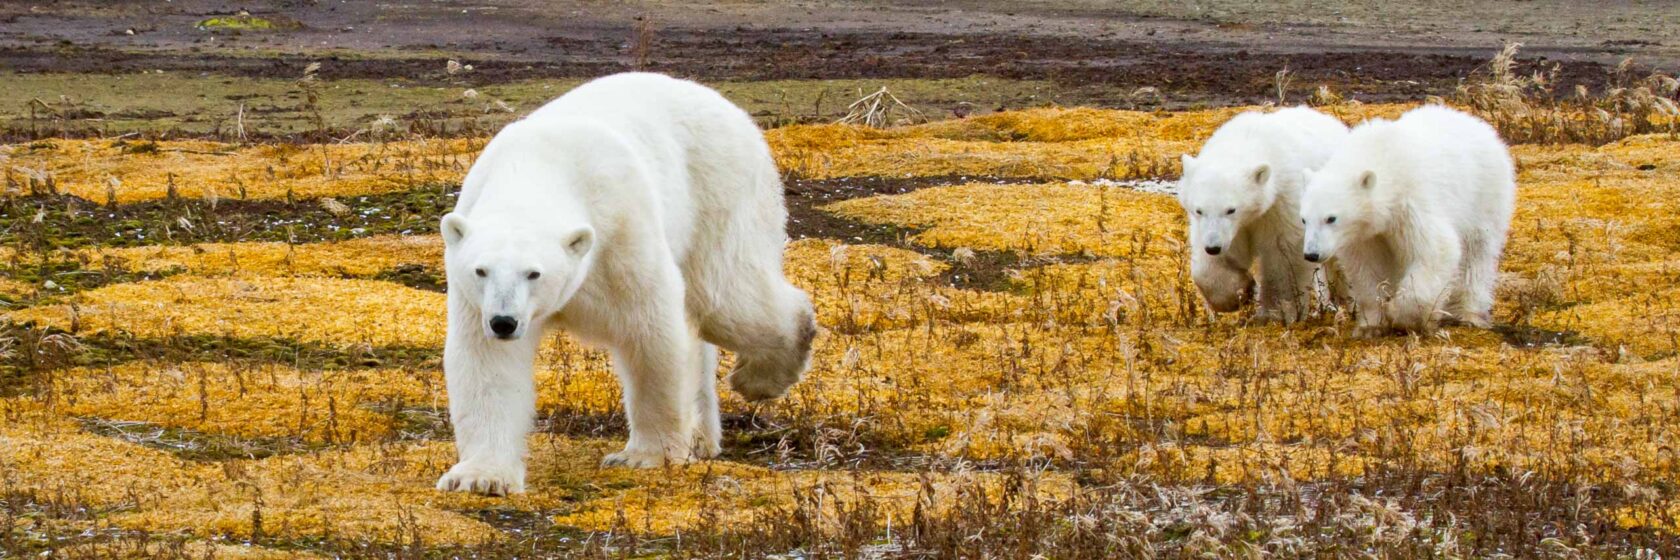 Three polar bears in Canada.